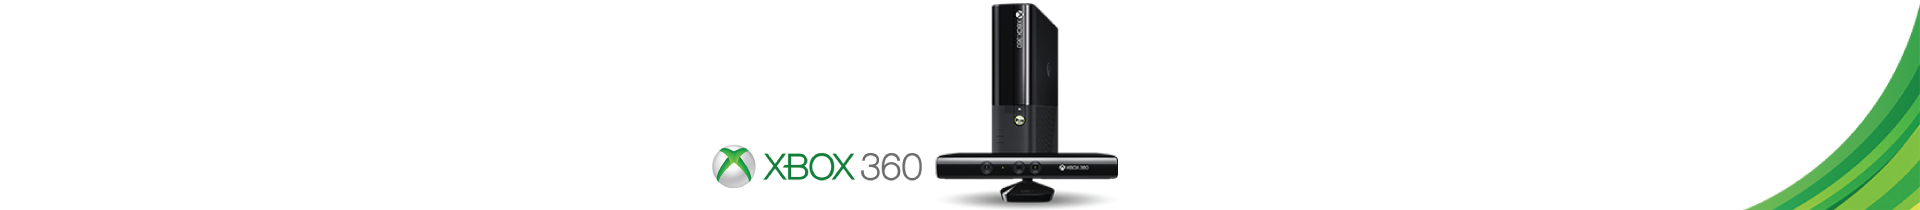 Jogos Xbox 360